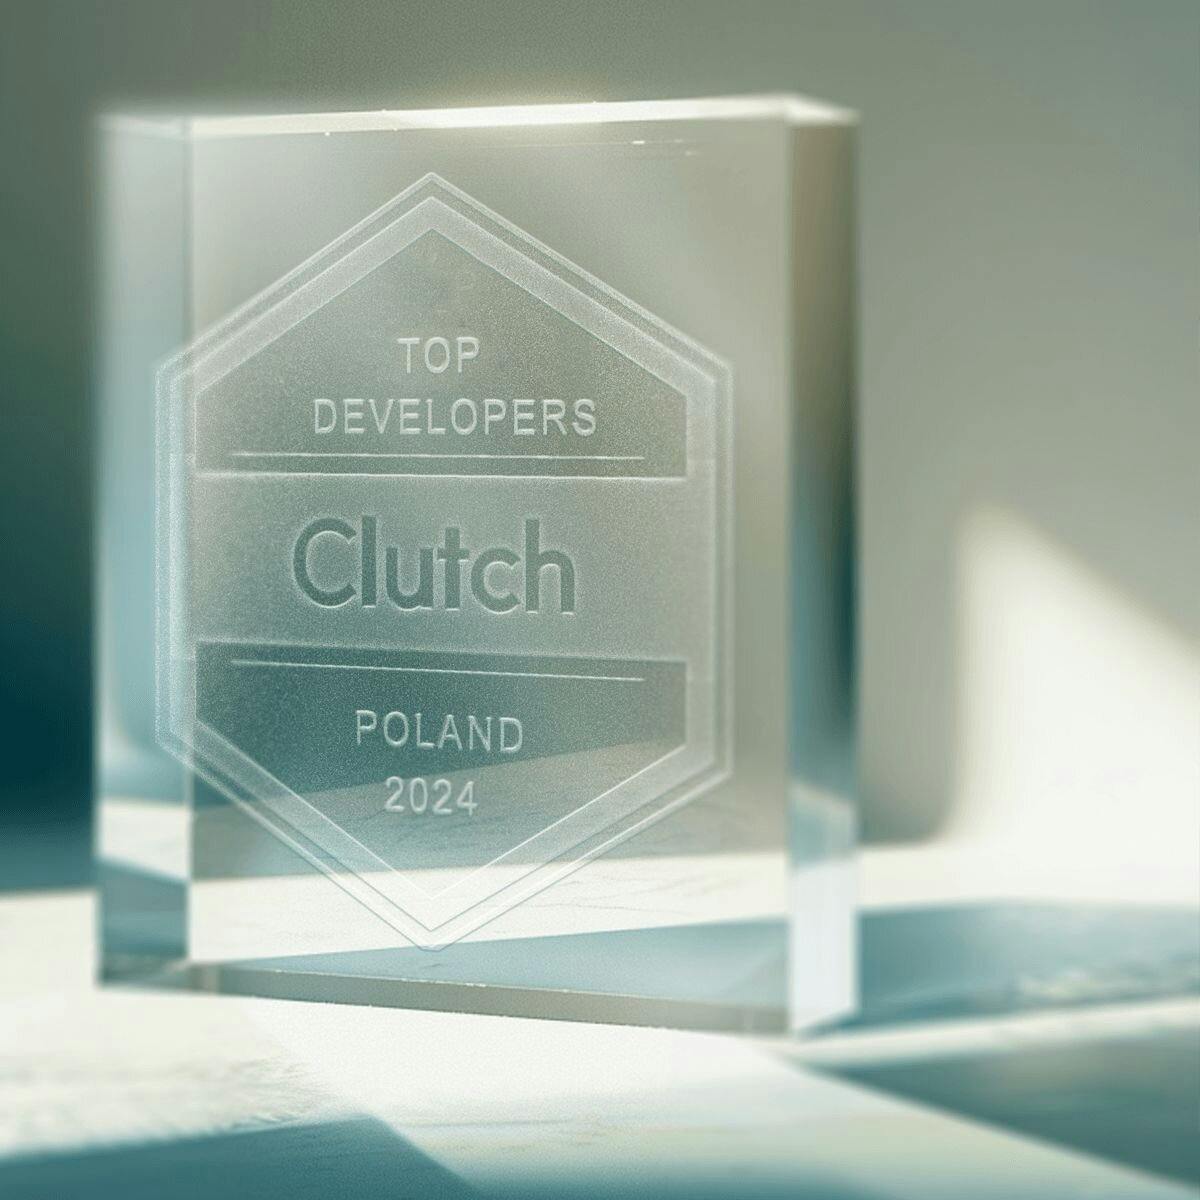 Clutch Names Mirumee Software a Top Python & Django Developer in Poland